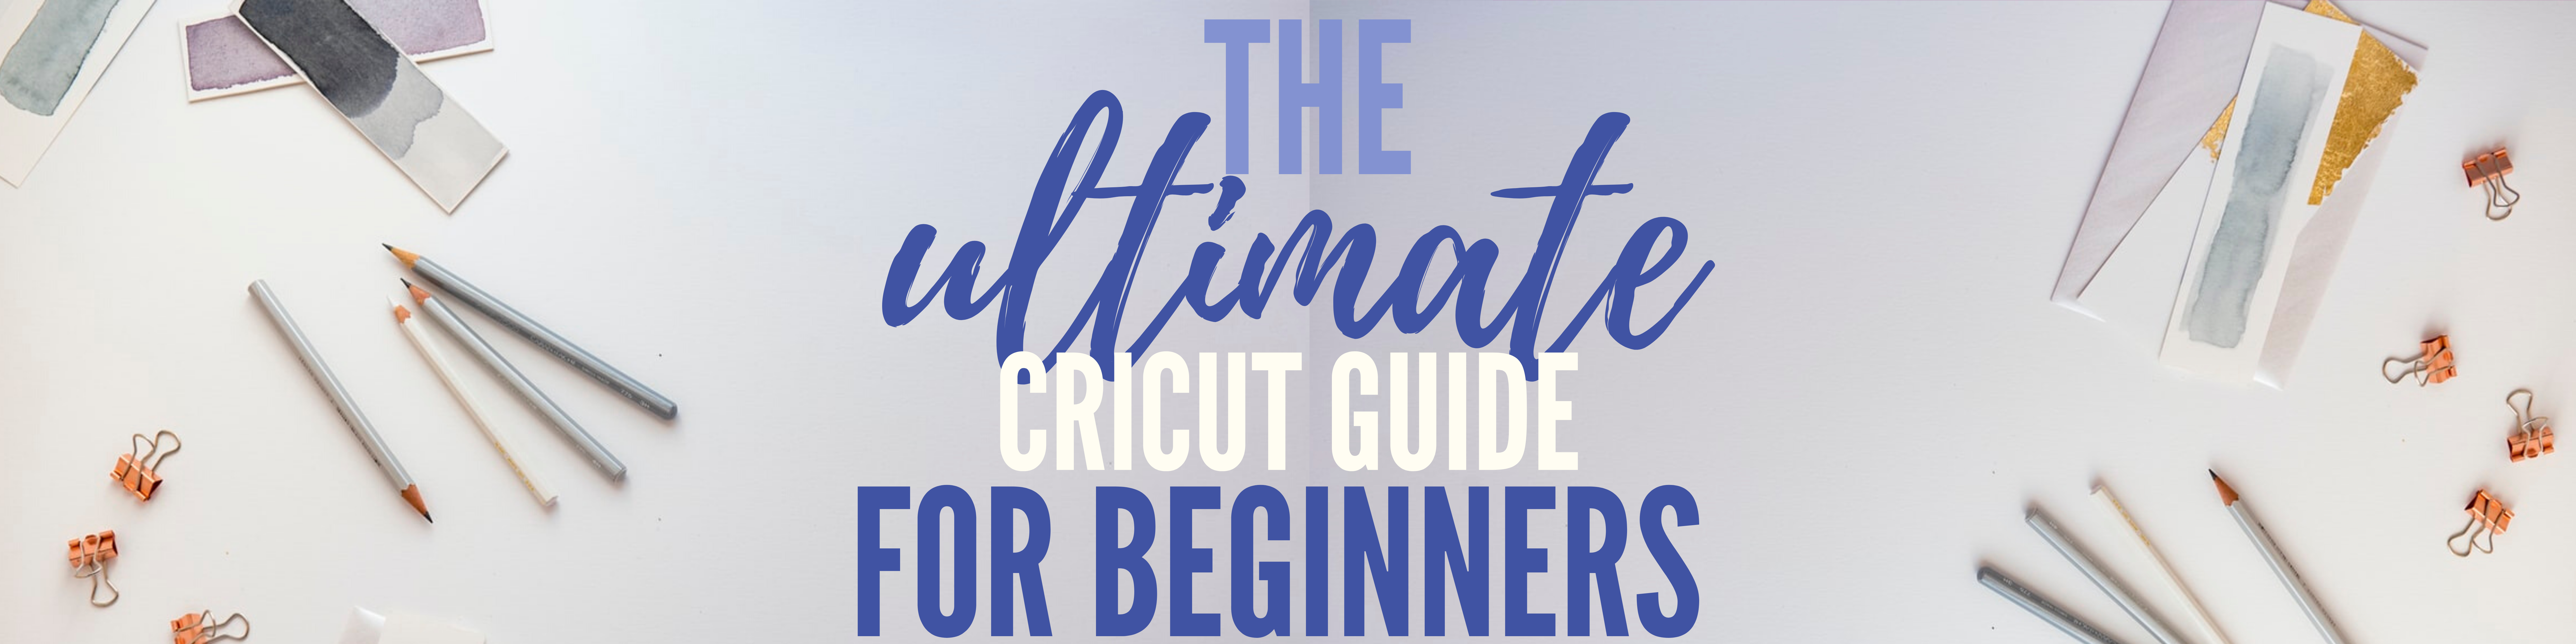 Cricut Basics for Beginners 